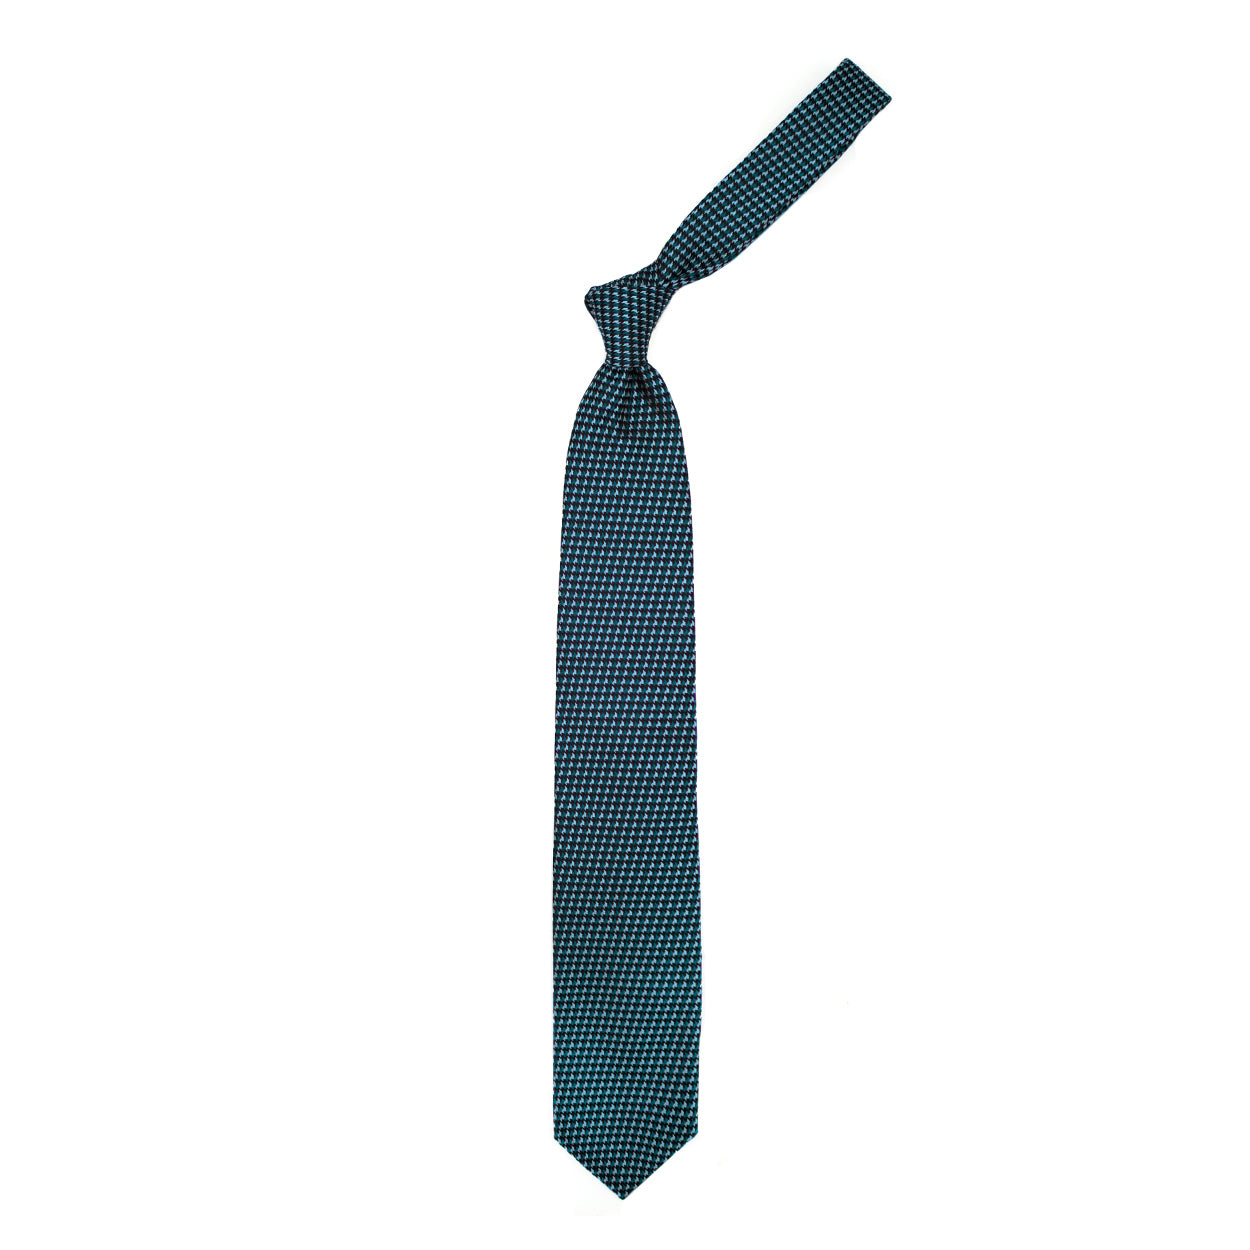 Cravatta tramata verde, azzurra e nera